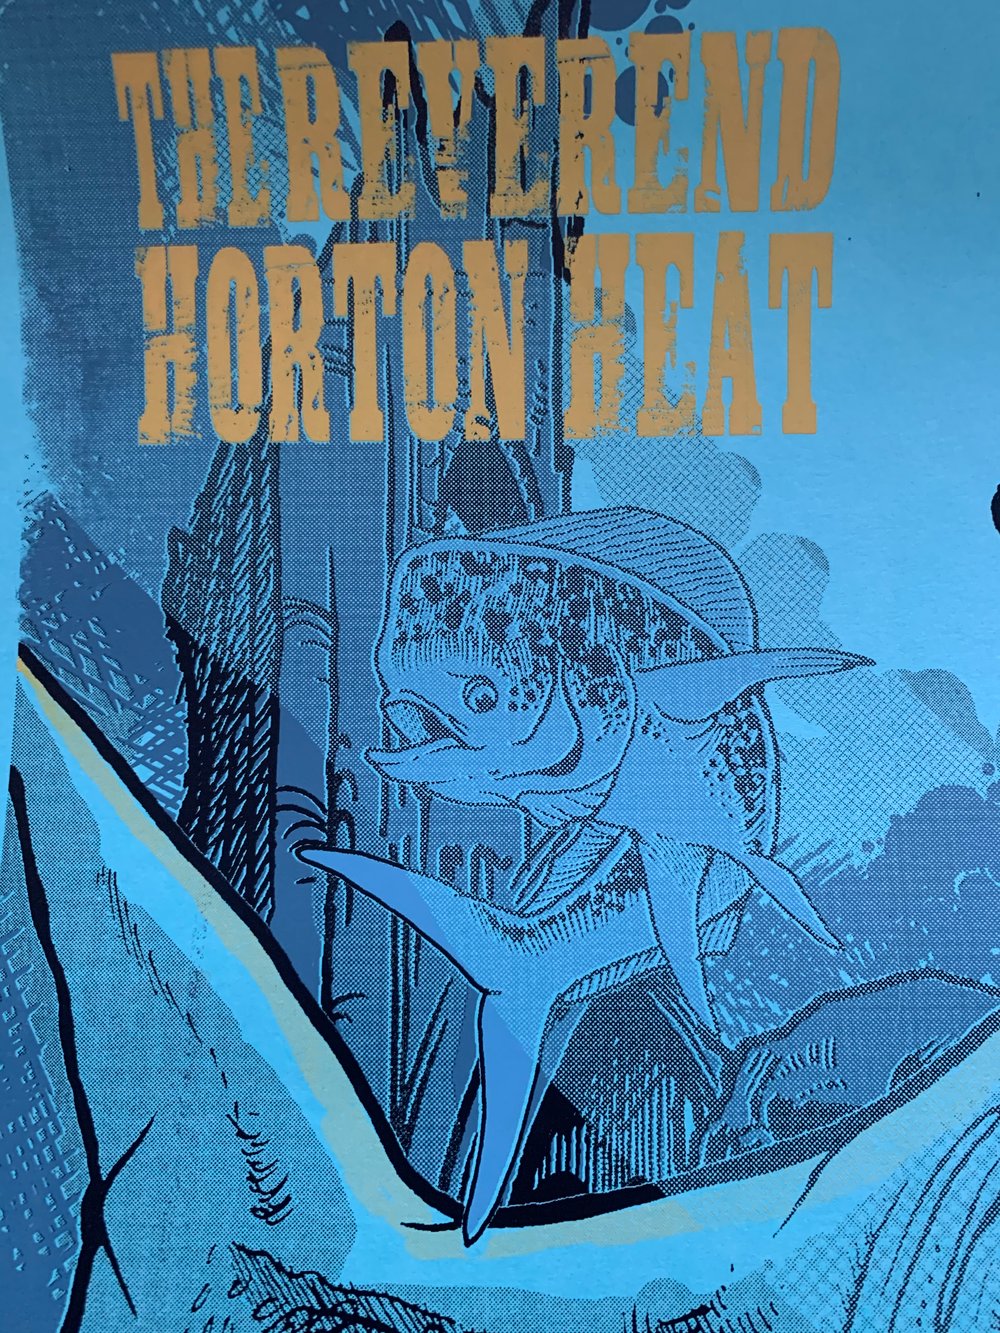 Reverend Horton Heat / Fear Silkscreen Concert Poster By David Paul Seymour @ Gas Monkey Dallas